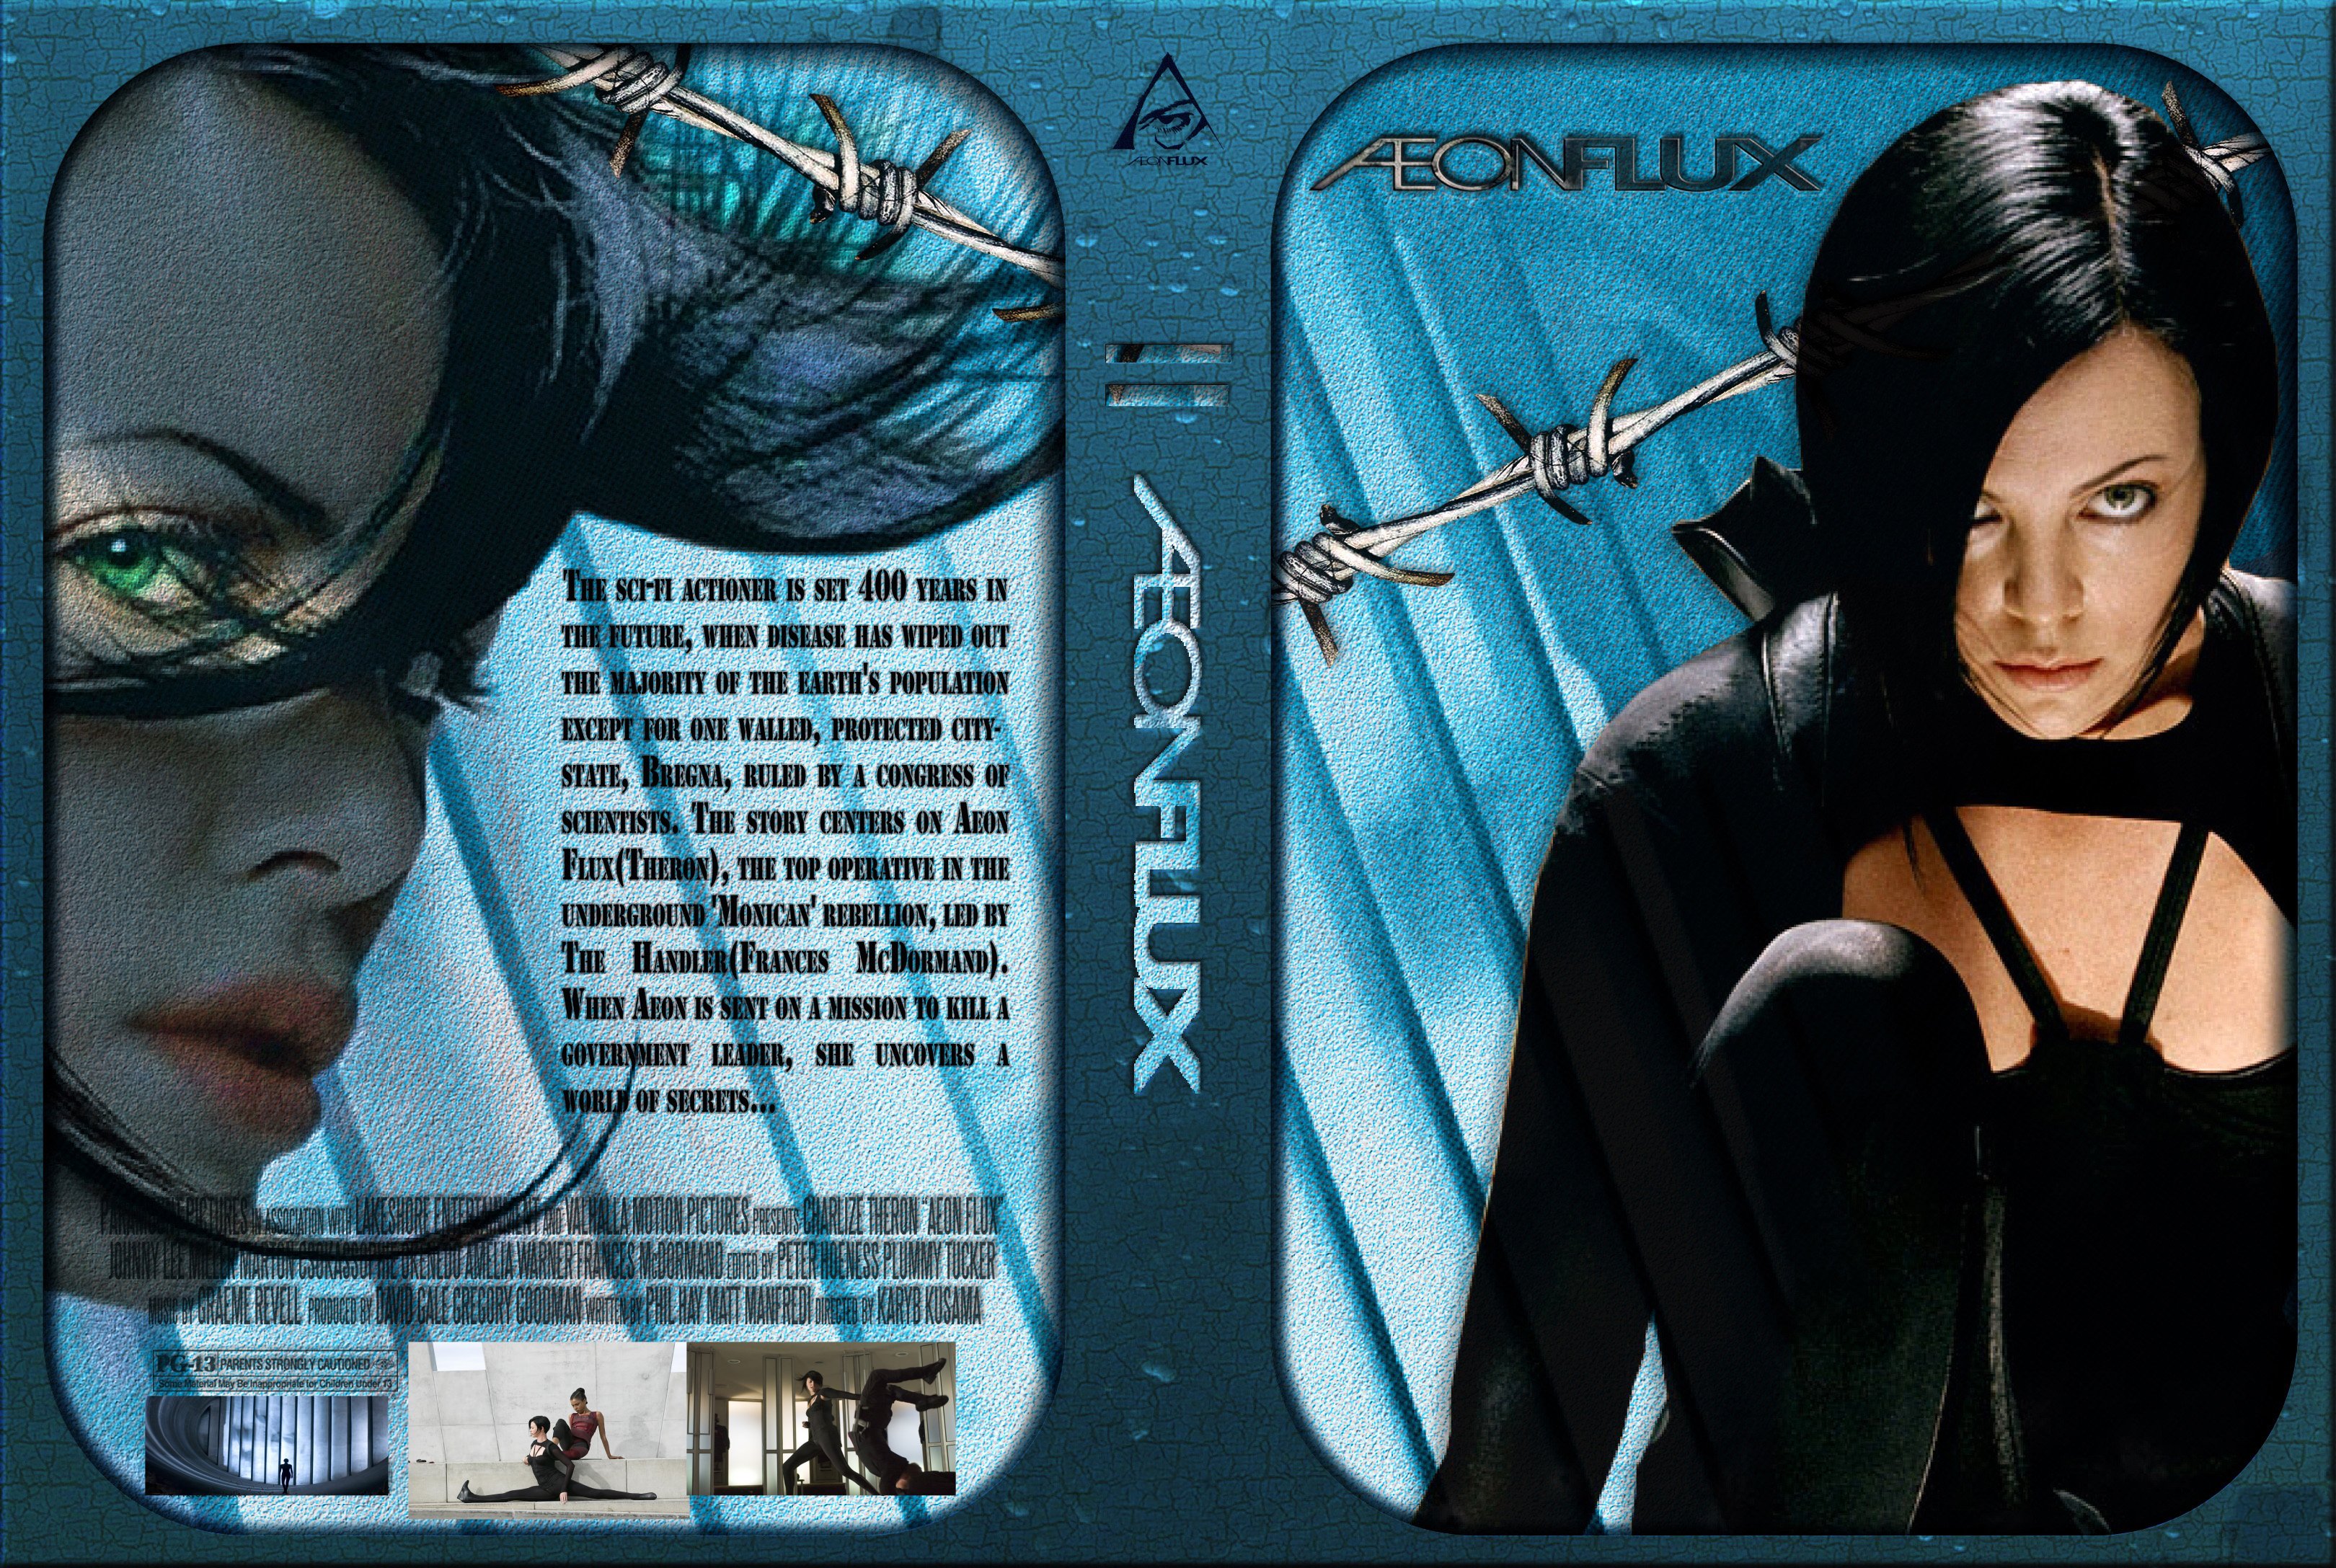 aeon flux dvd cover art